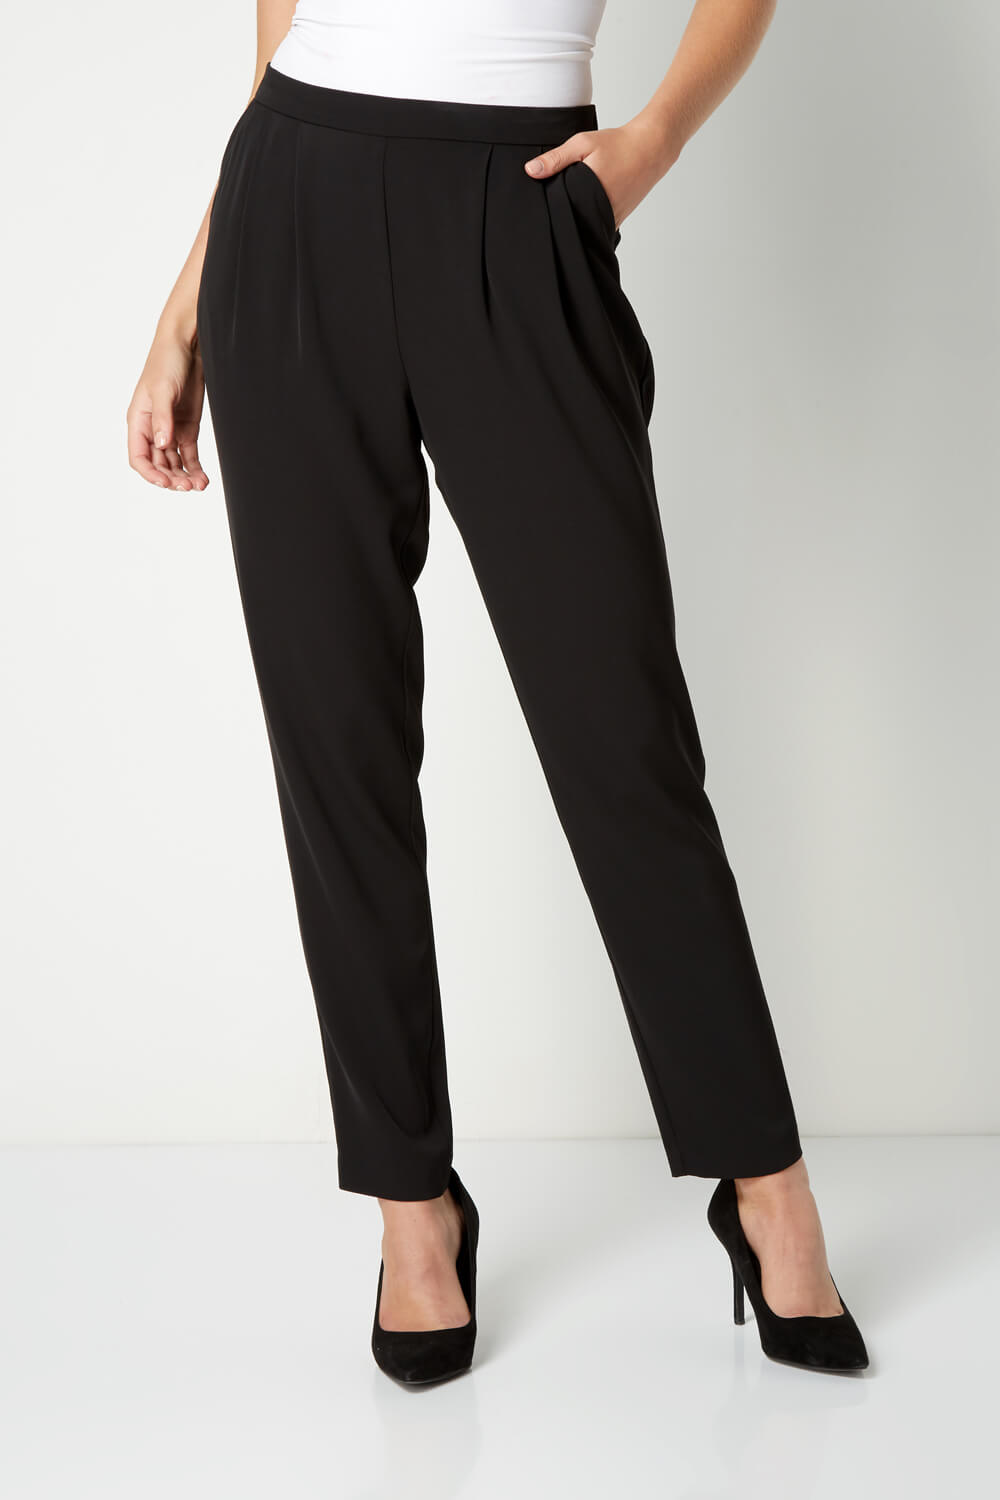 Womens Ladies Ribbed Trousers Smart Slim FIT Legging Pockets Crepe Tapered  Pants[Black,10] : Amazon.co.uk: Fashion